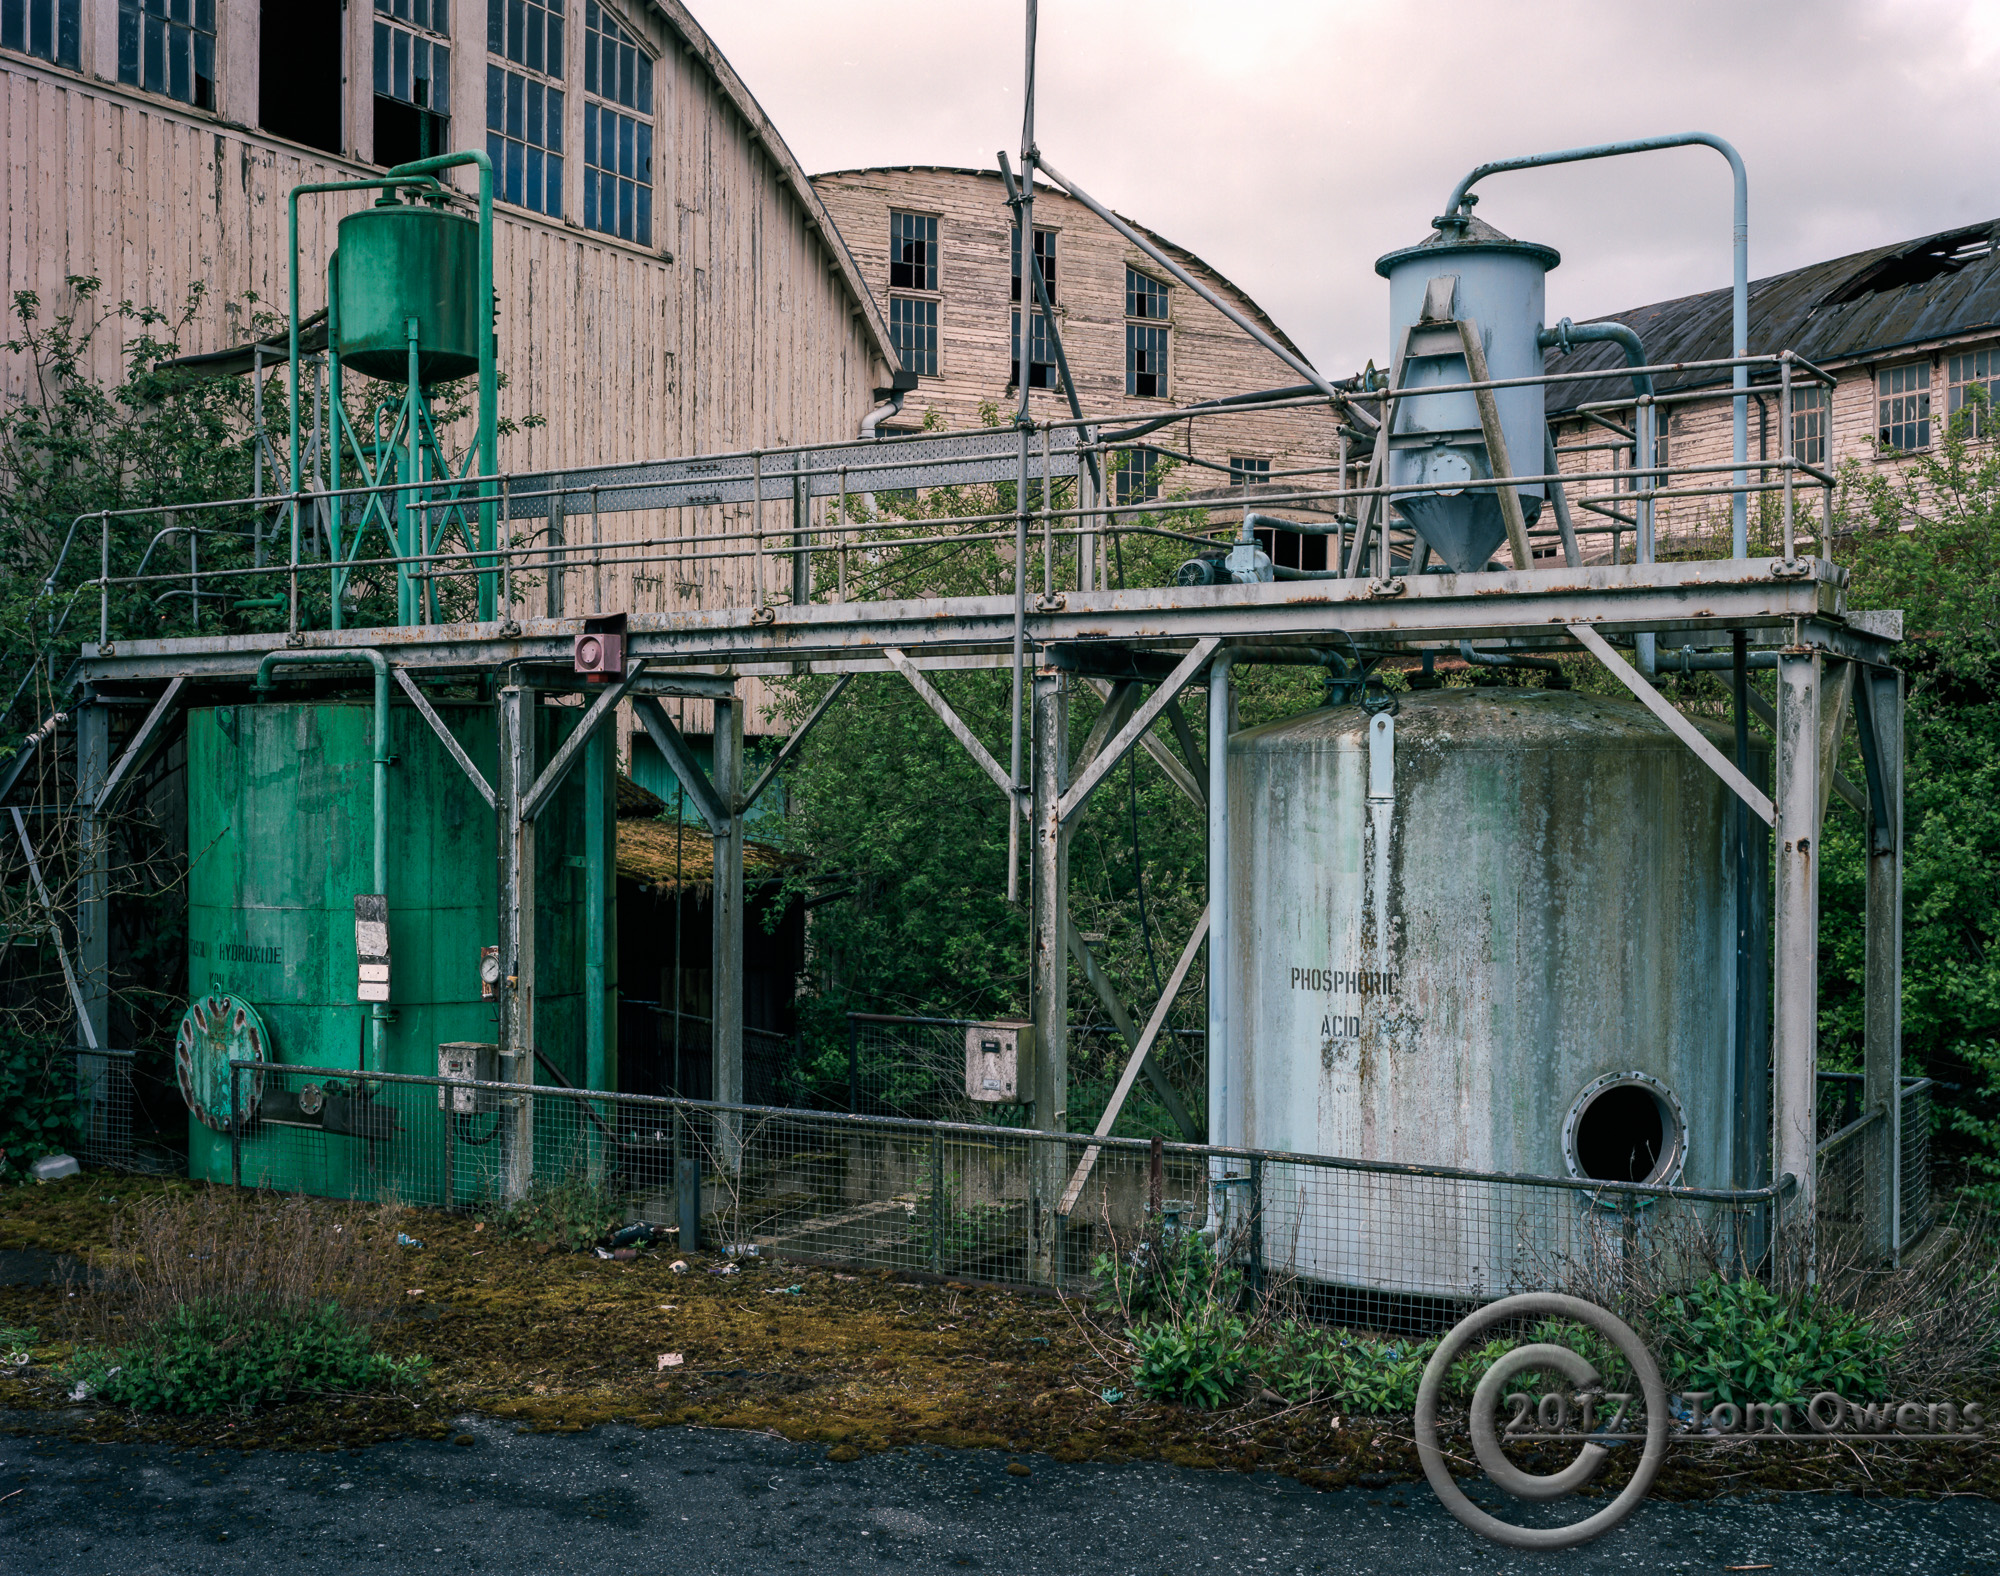 Potassium Hydroxide and Phosphoric Acid tanks in derelict factory